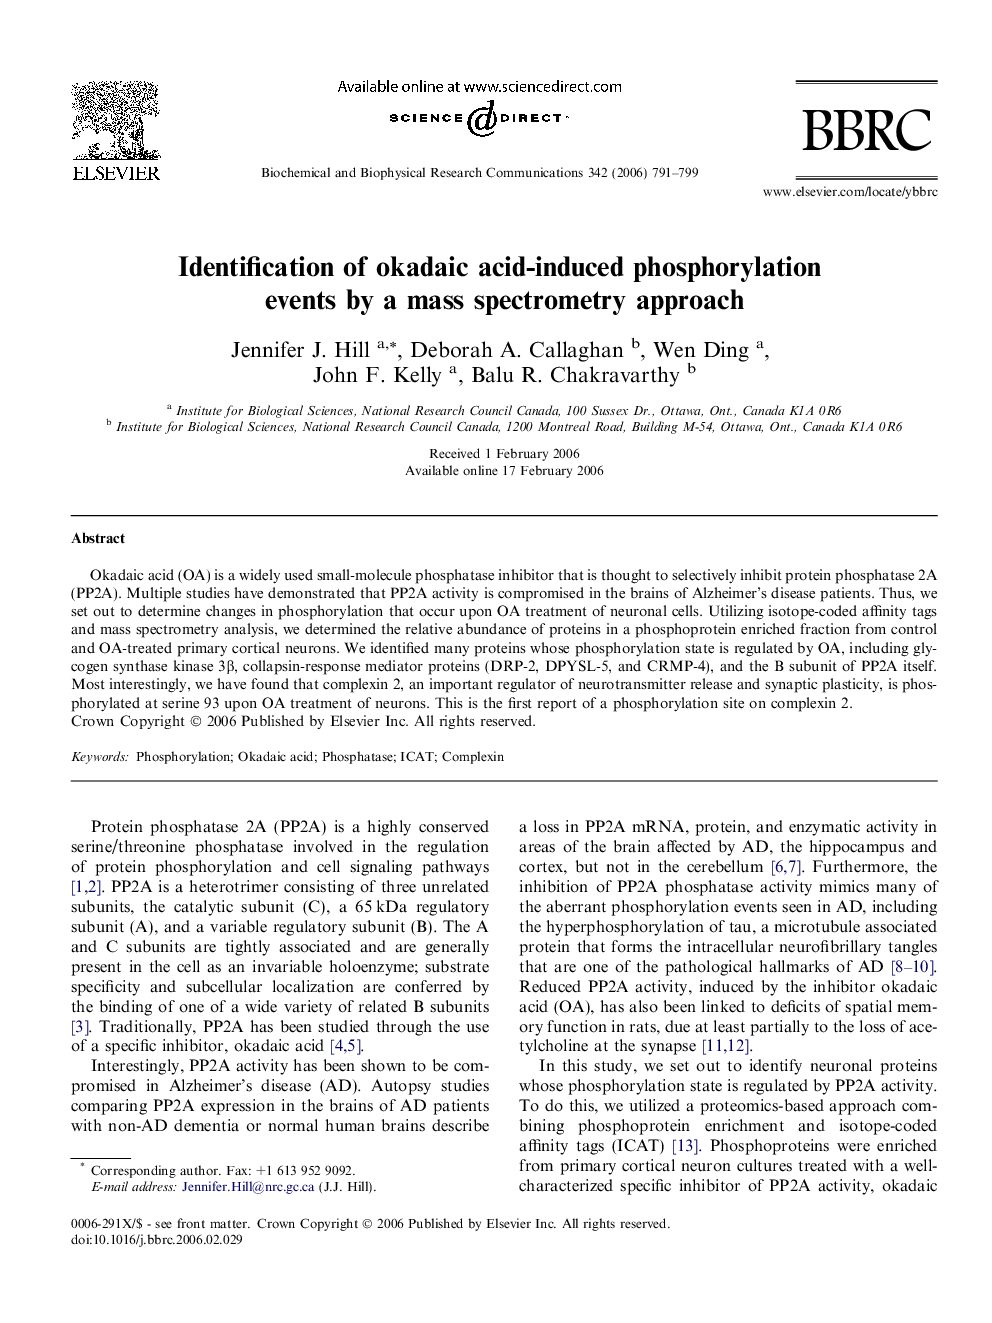 Identification of okadaic acid-induced phosphorylation events by a mass spectrometry approach